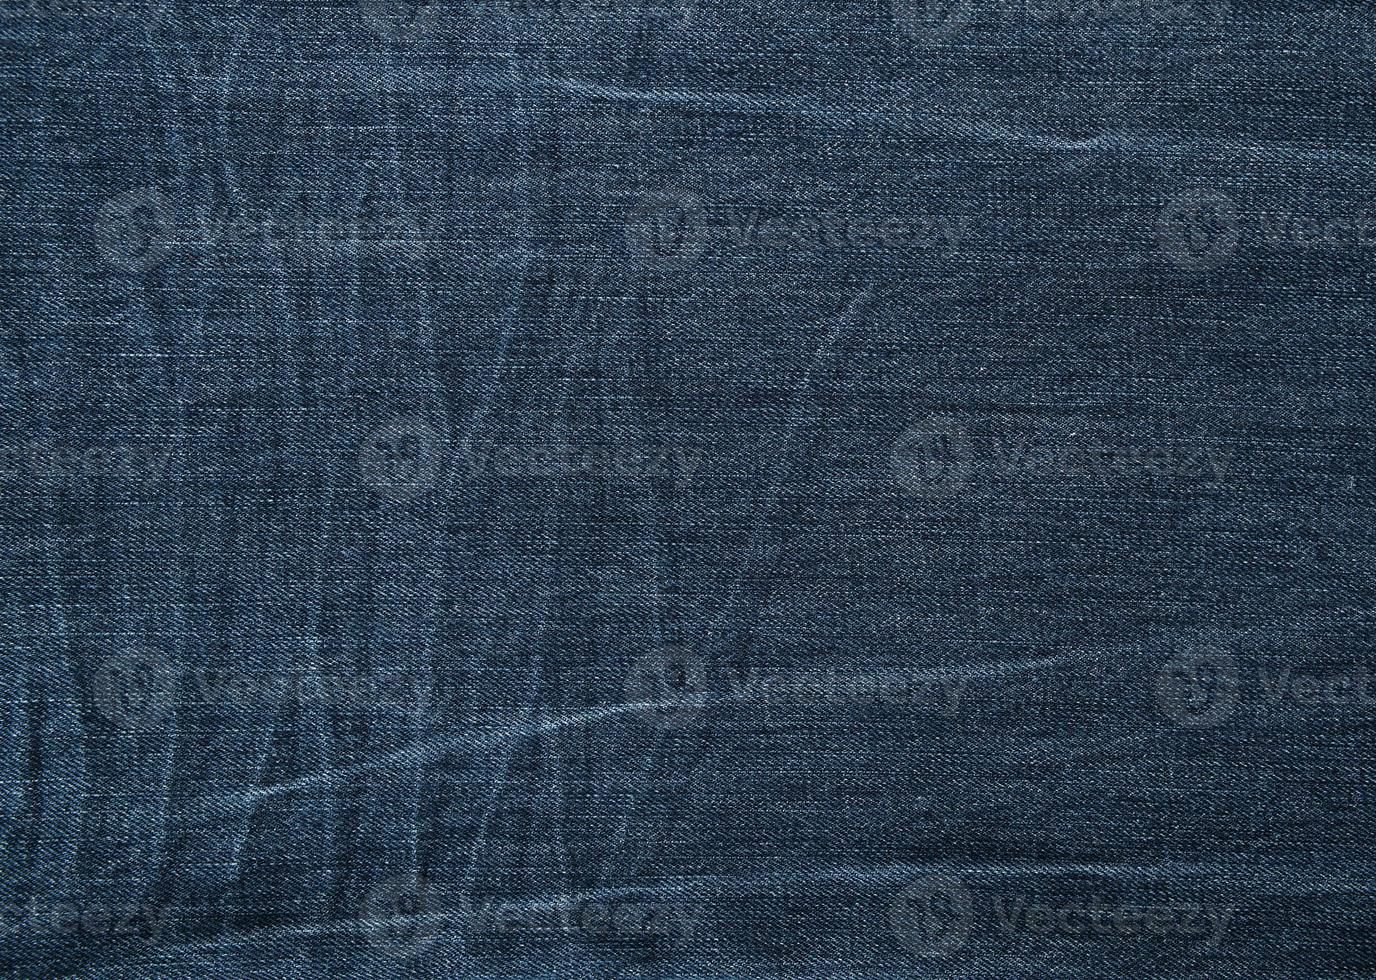 buio blu jeans struttura pieno telaio foto